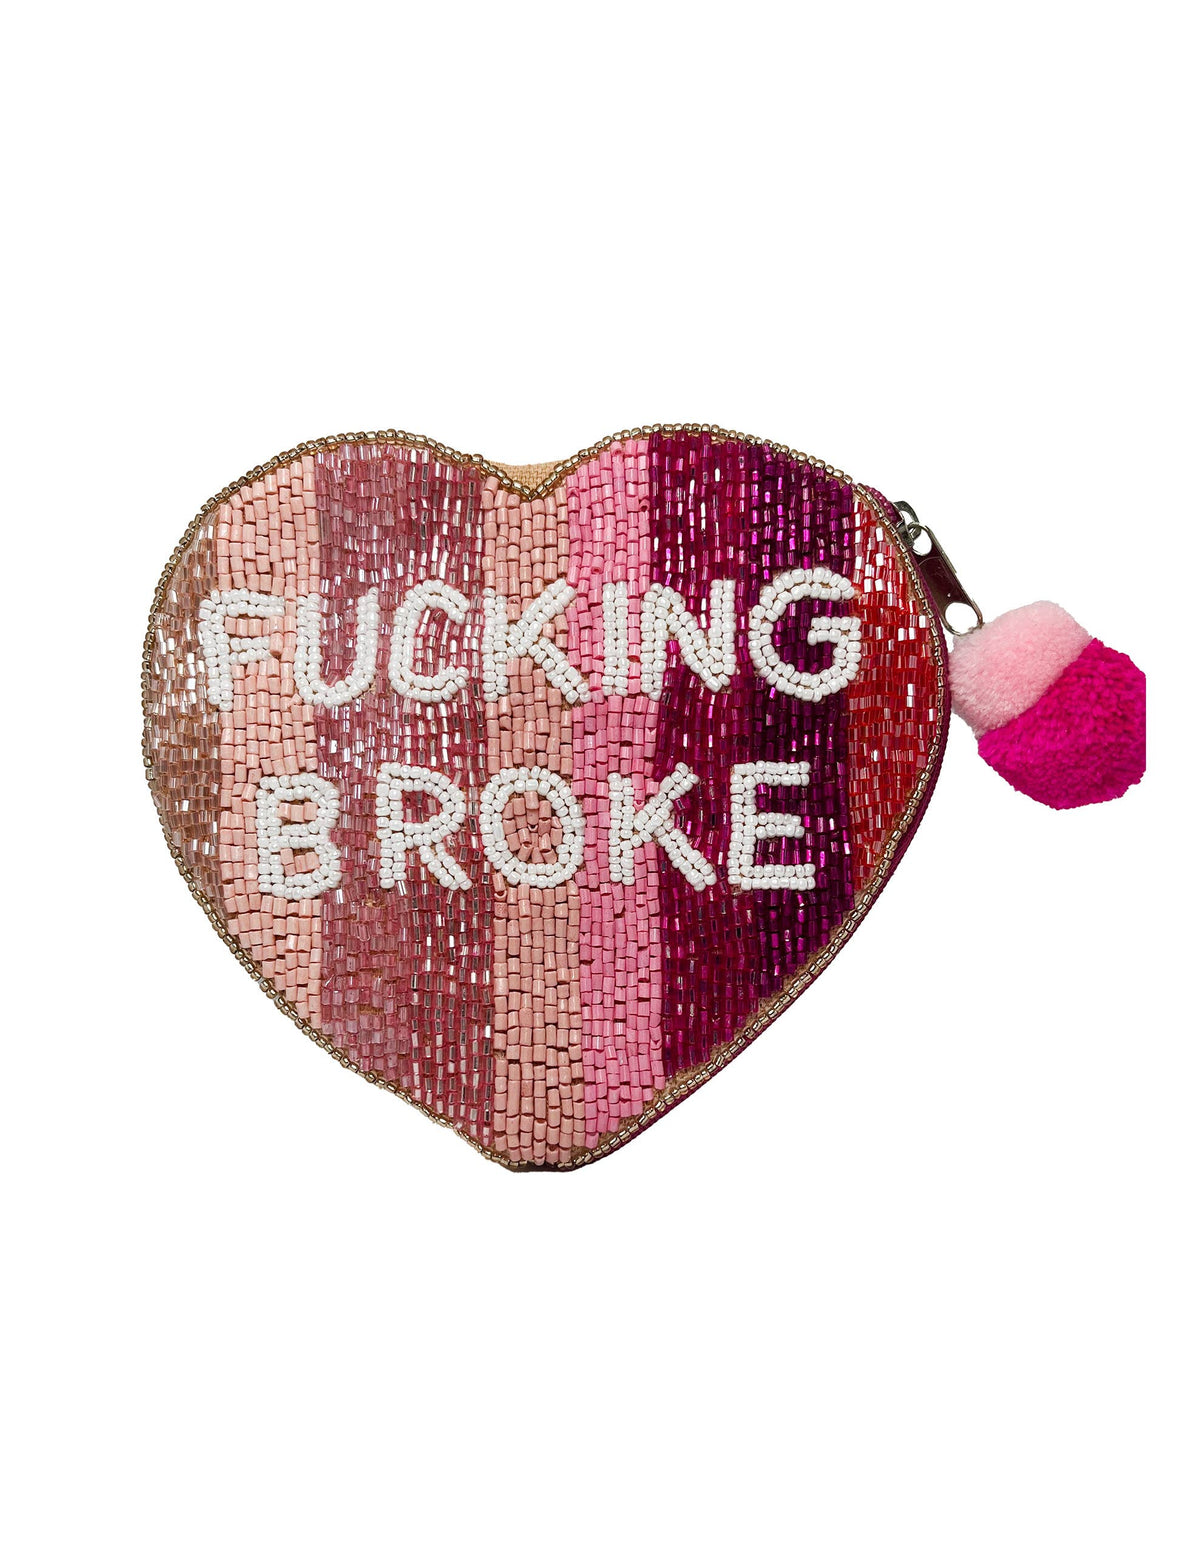 F’n Broke Heart Coin Purse